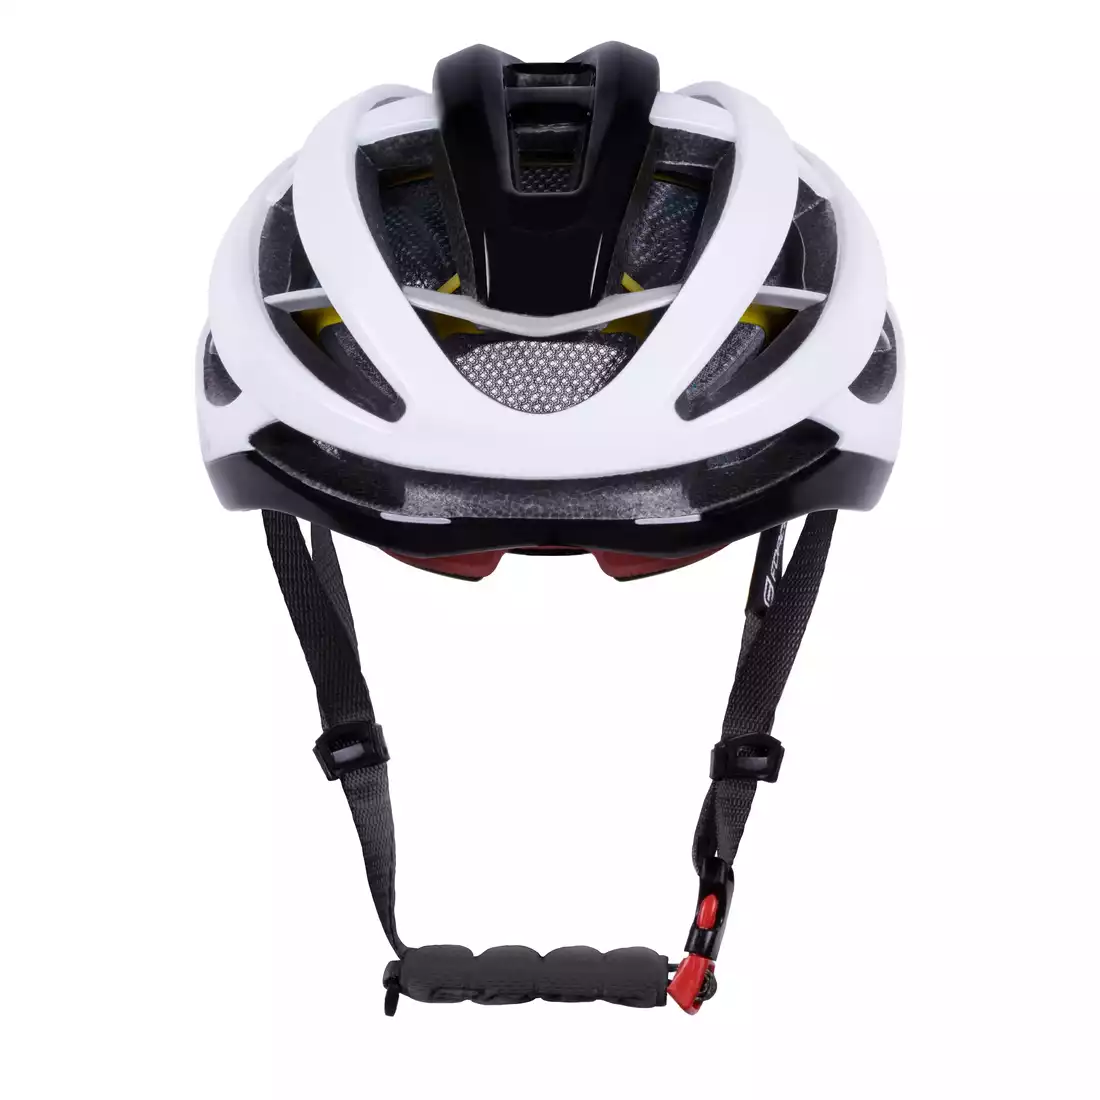 FORCE LYNX MIPS Bicycle helmet, black and white